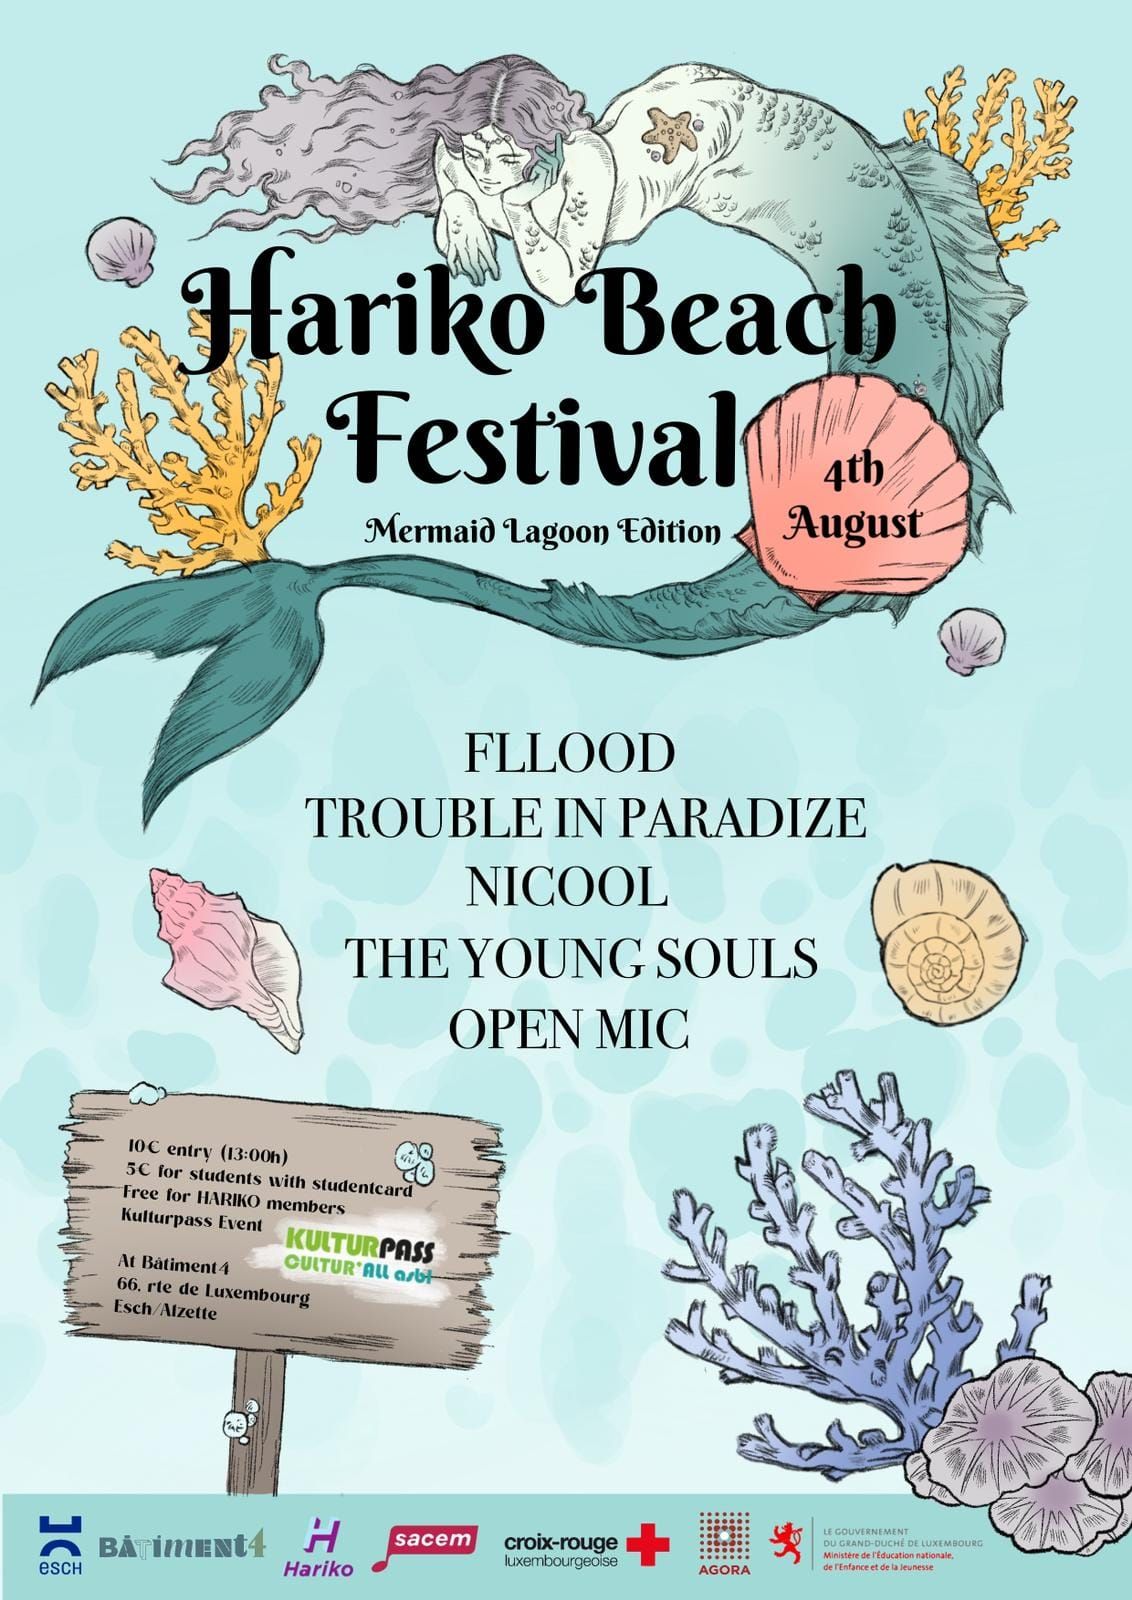 Hariko Beach Festival Mermaid Lagoon Edition